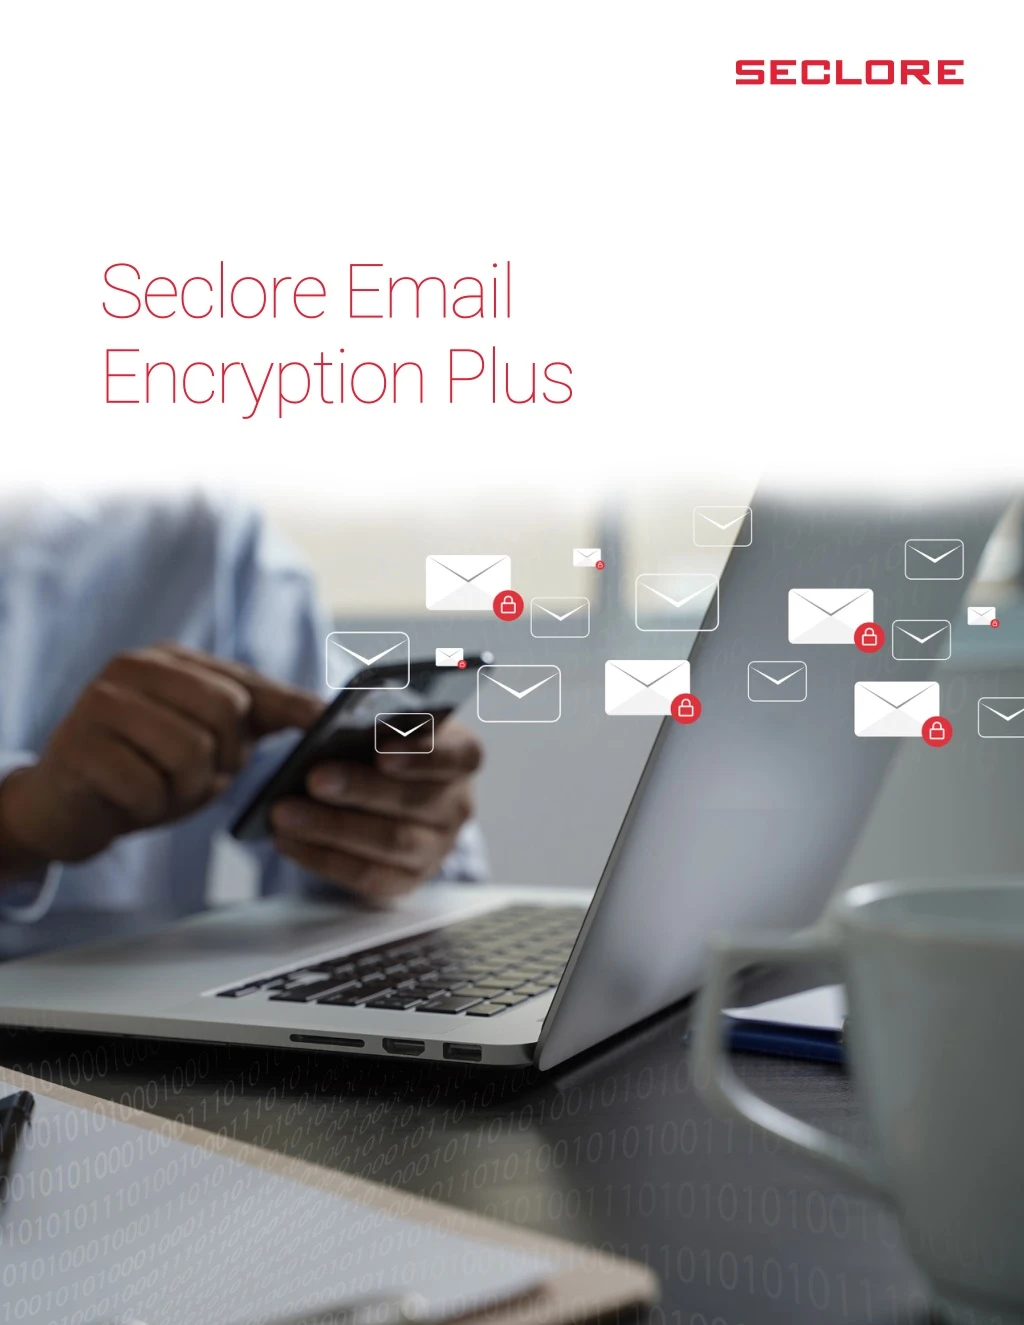 seclore email encryption plus